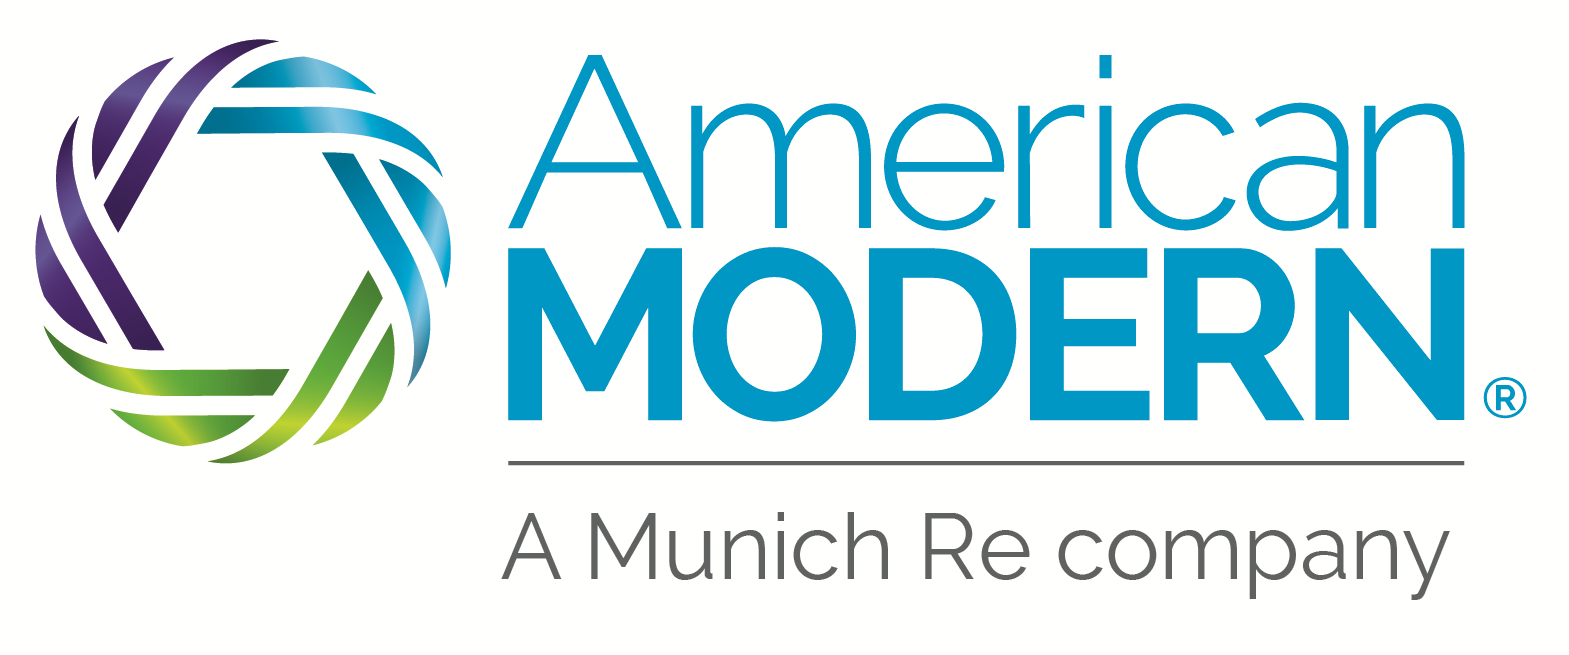 American Modern logo